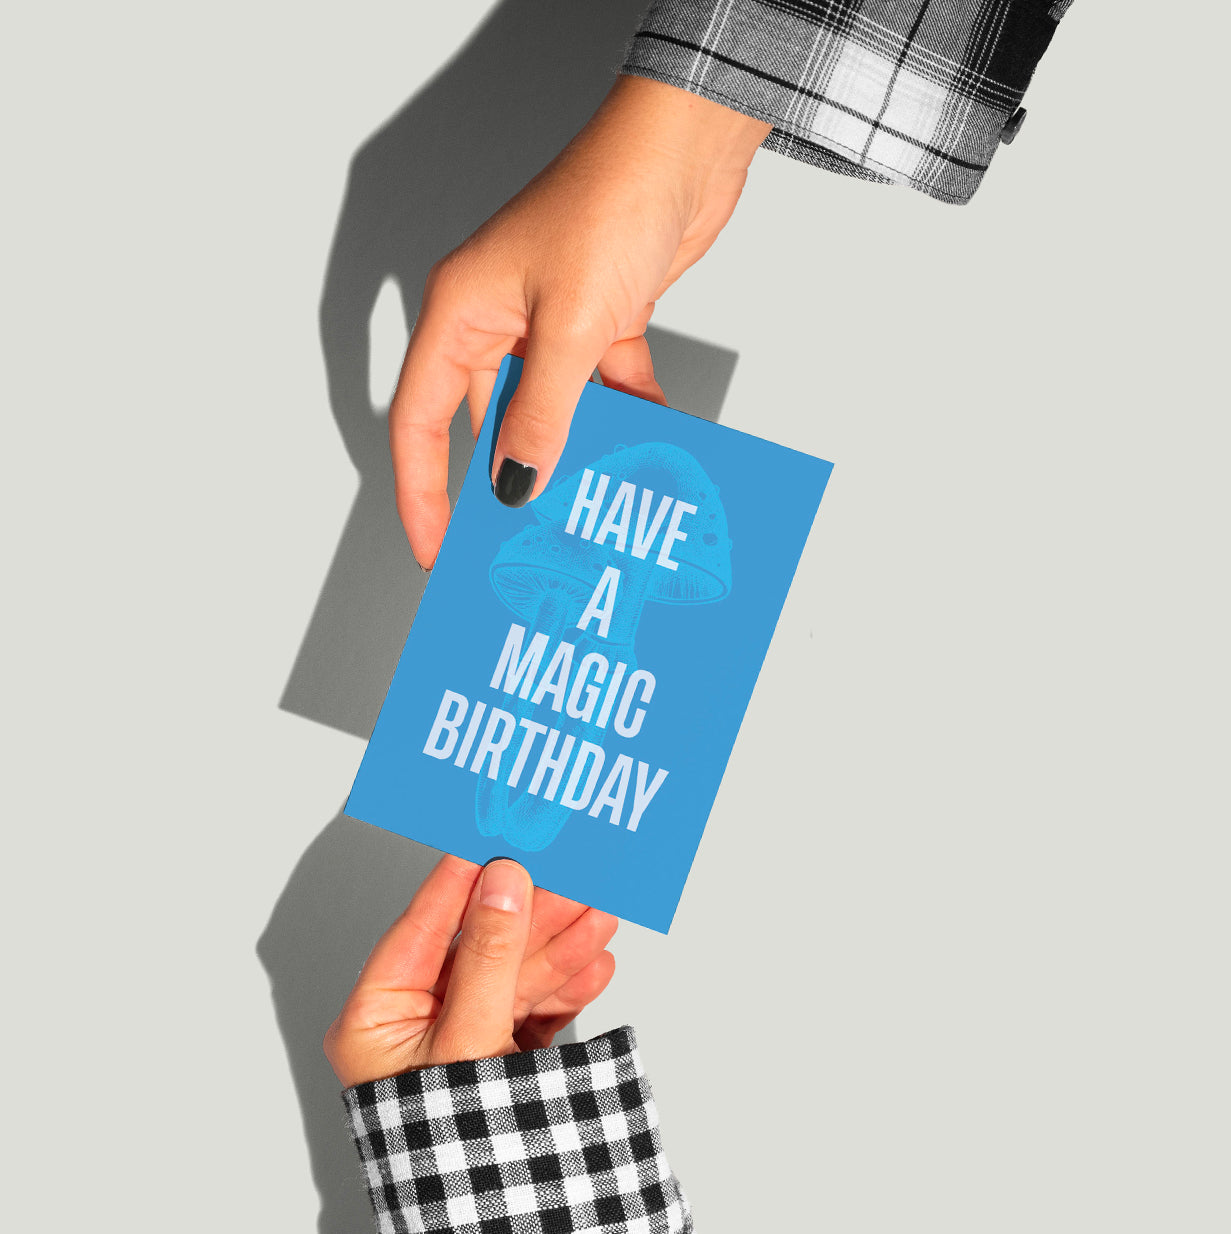 Have A Magic Birthday Magic Mushroom Card | Birthday Card | For Him | For Her | Friend